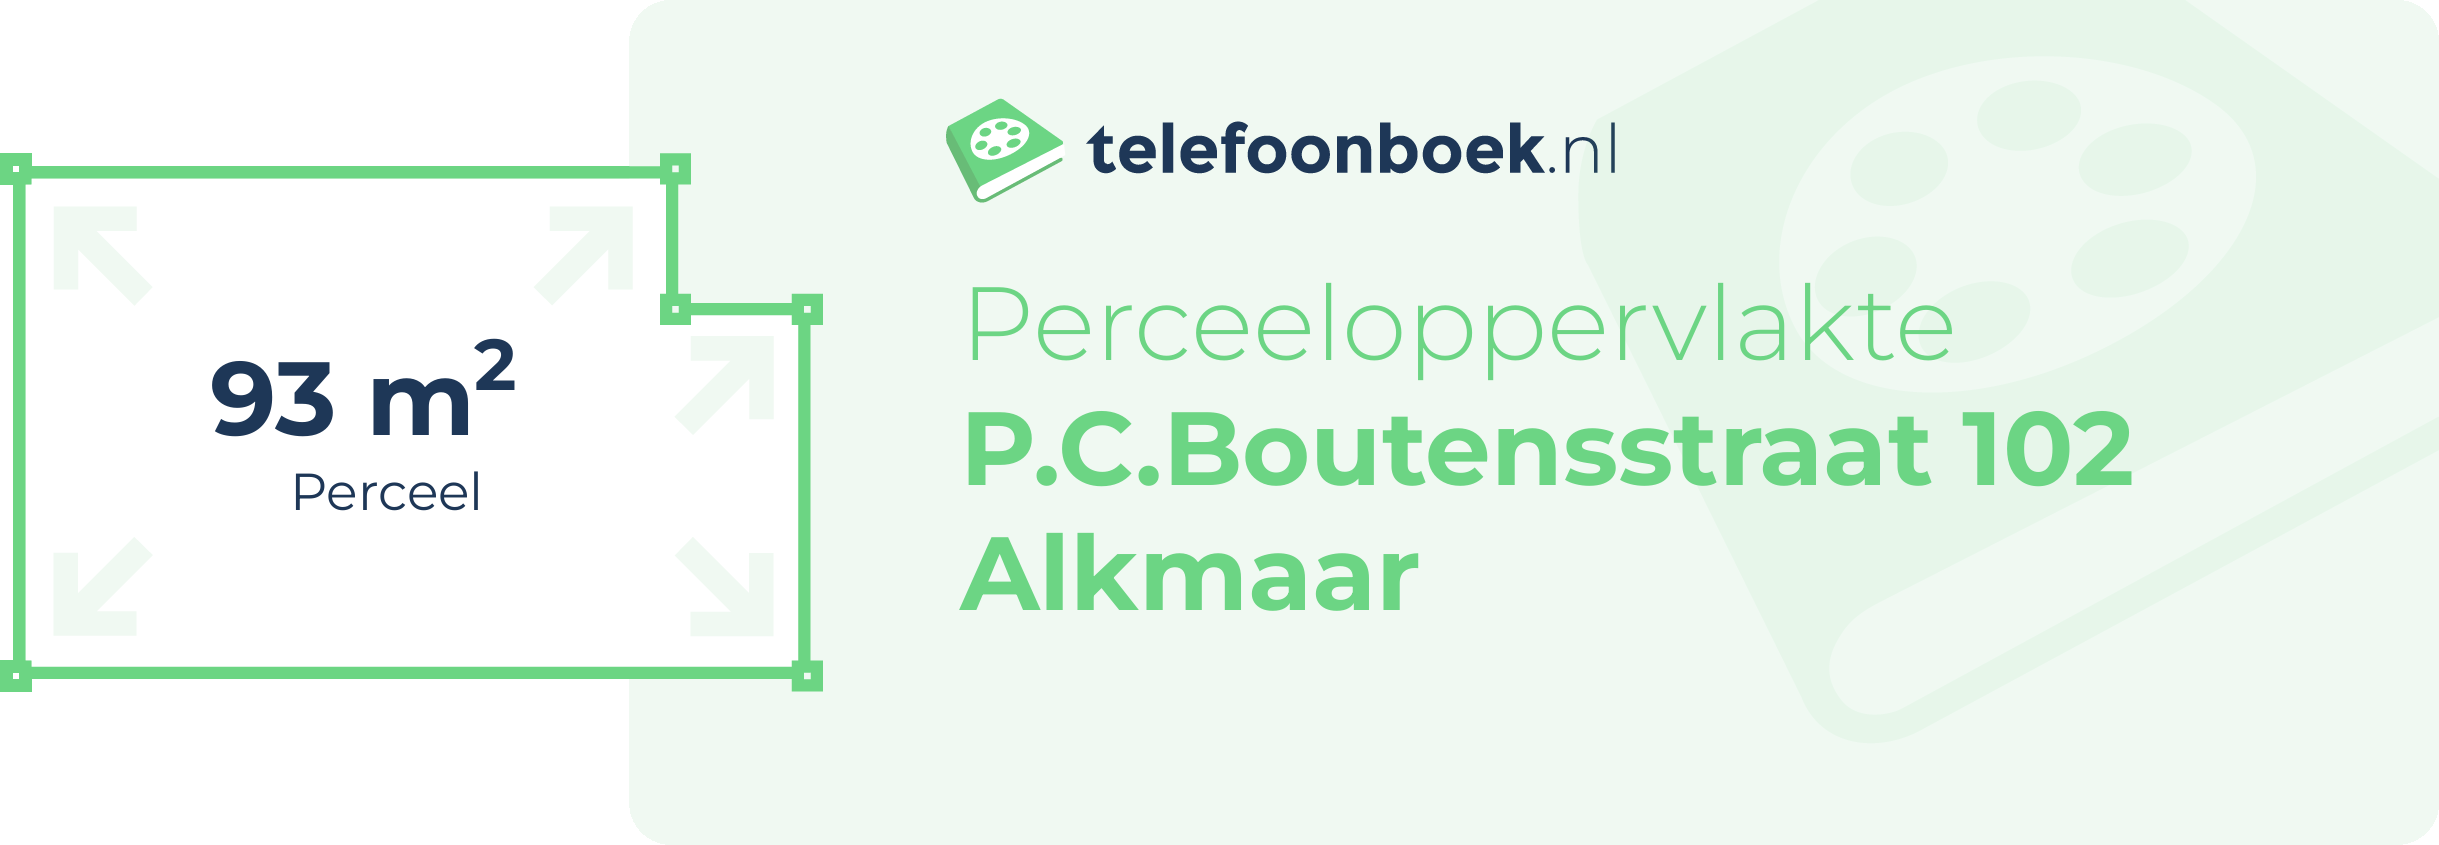 Perceeloppervlakte P.C.Boutensstraat 102 Alkmaar